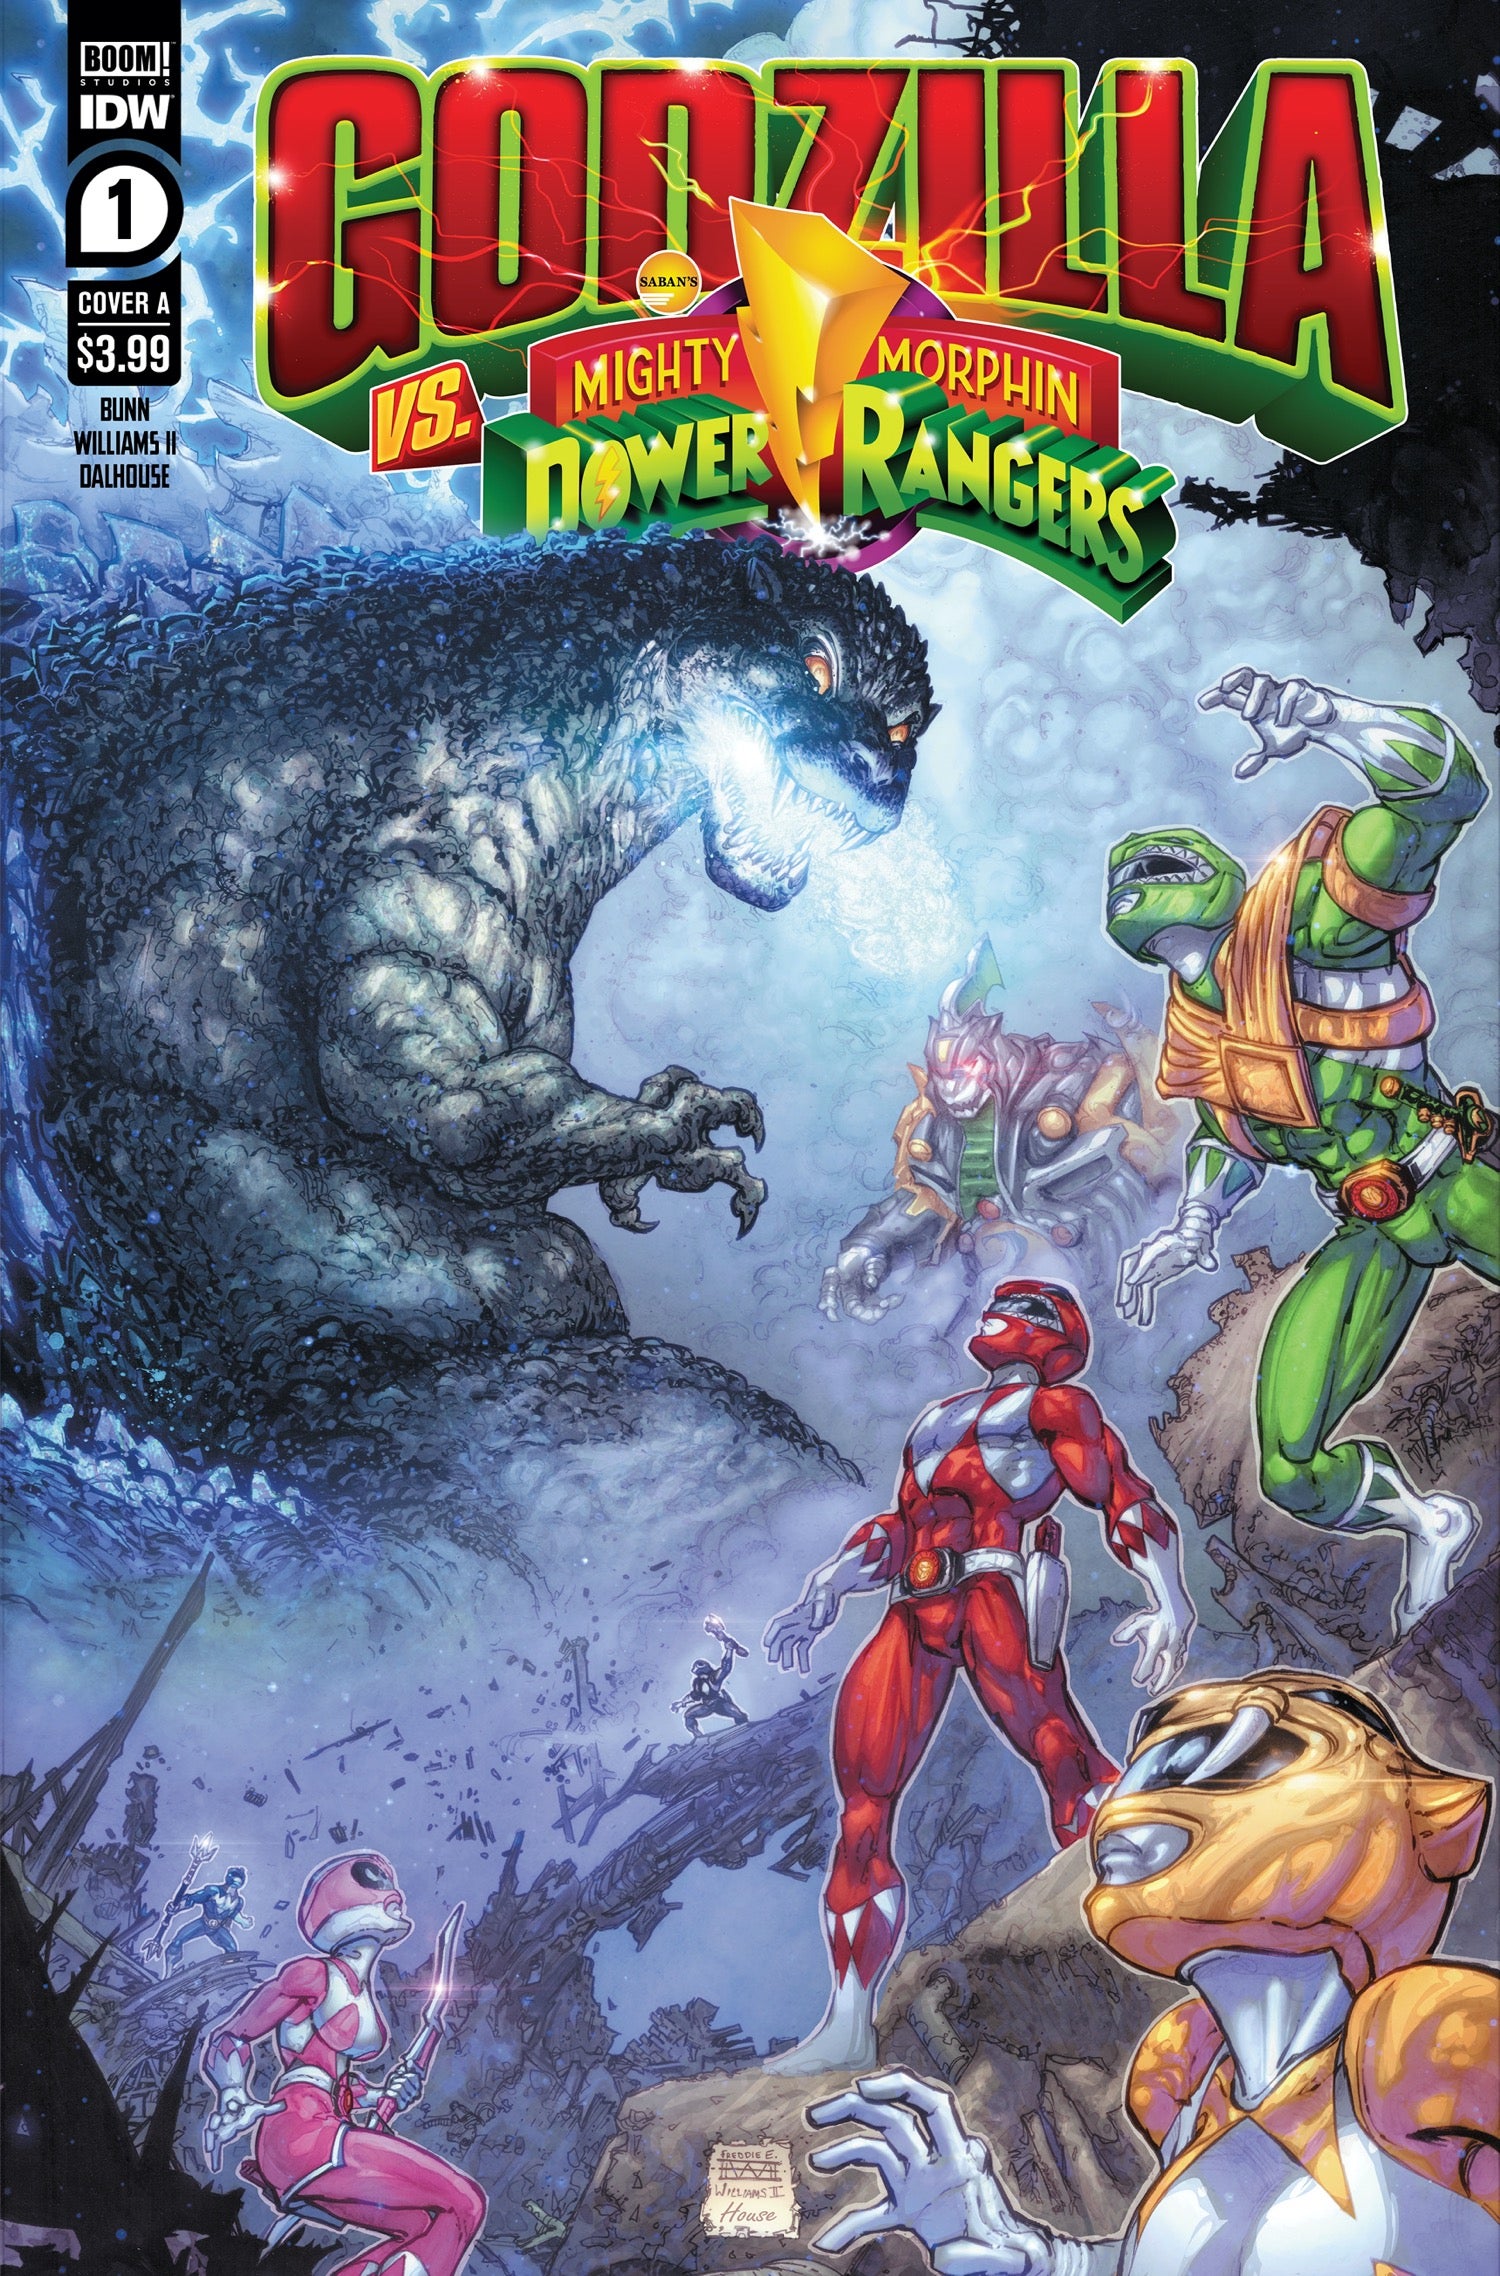 Full cover art of Godzilla Vs. the Mighty Morphin Power Rangers #1 by Freddie Williams II. (Image: IDW/Boom Studios/Toho)